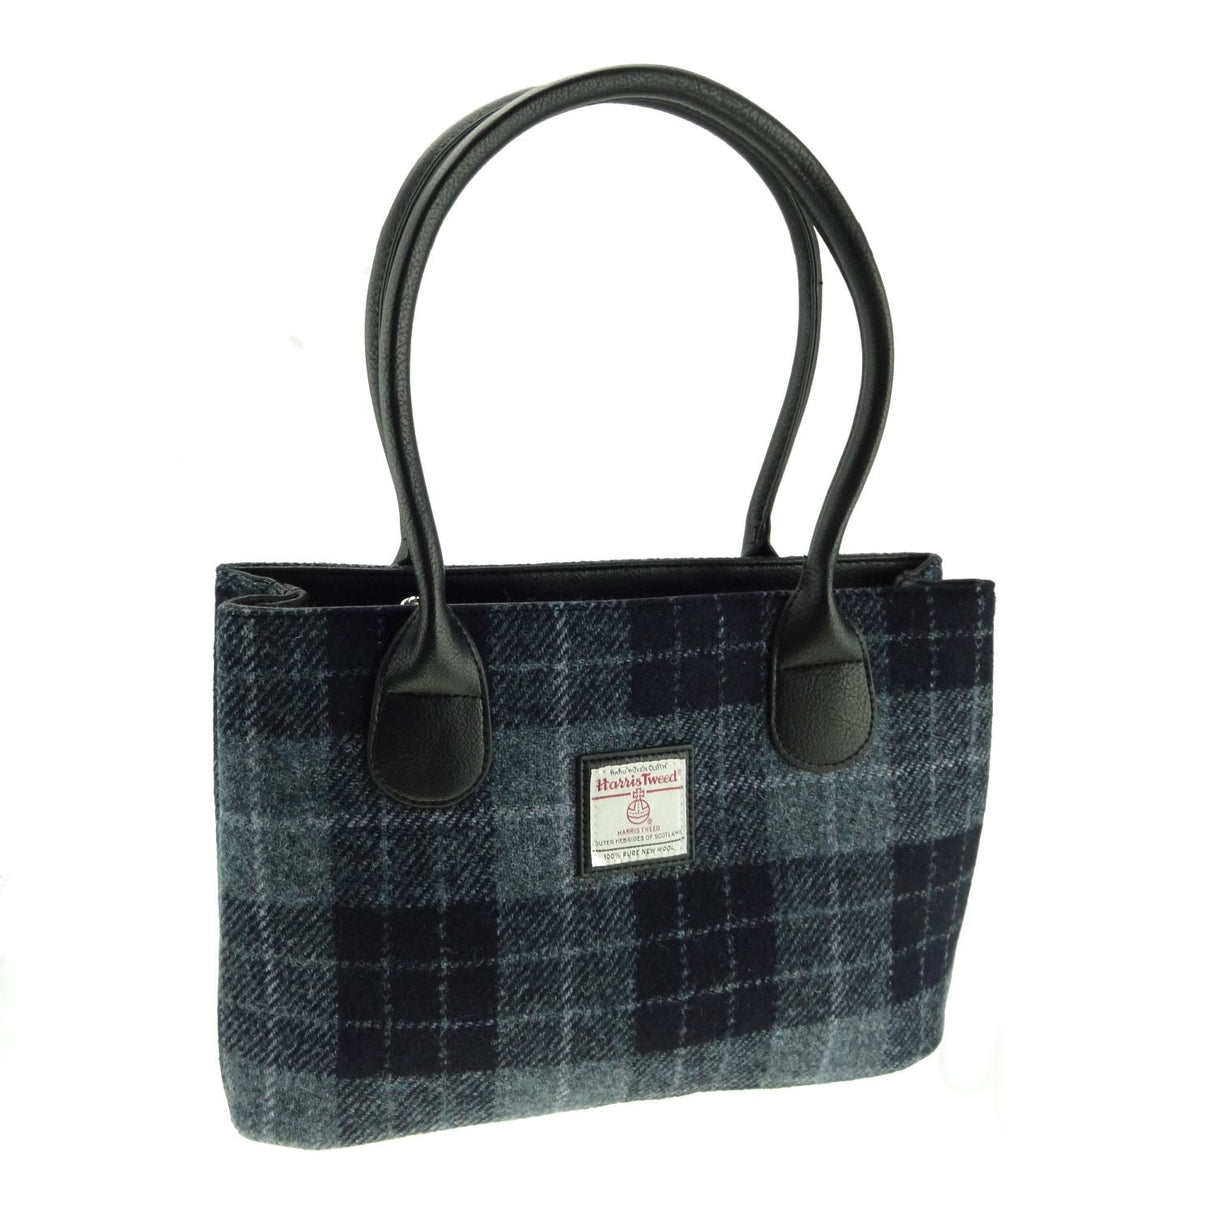 Classic Harris Tweed Handbag By Glen Appin - Cassley LB1003